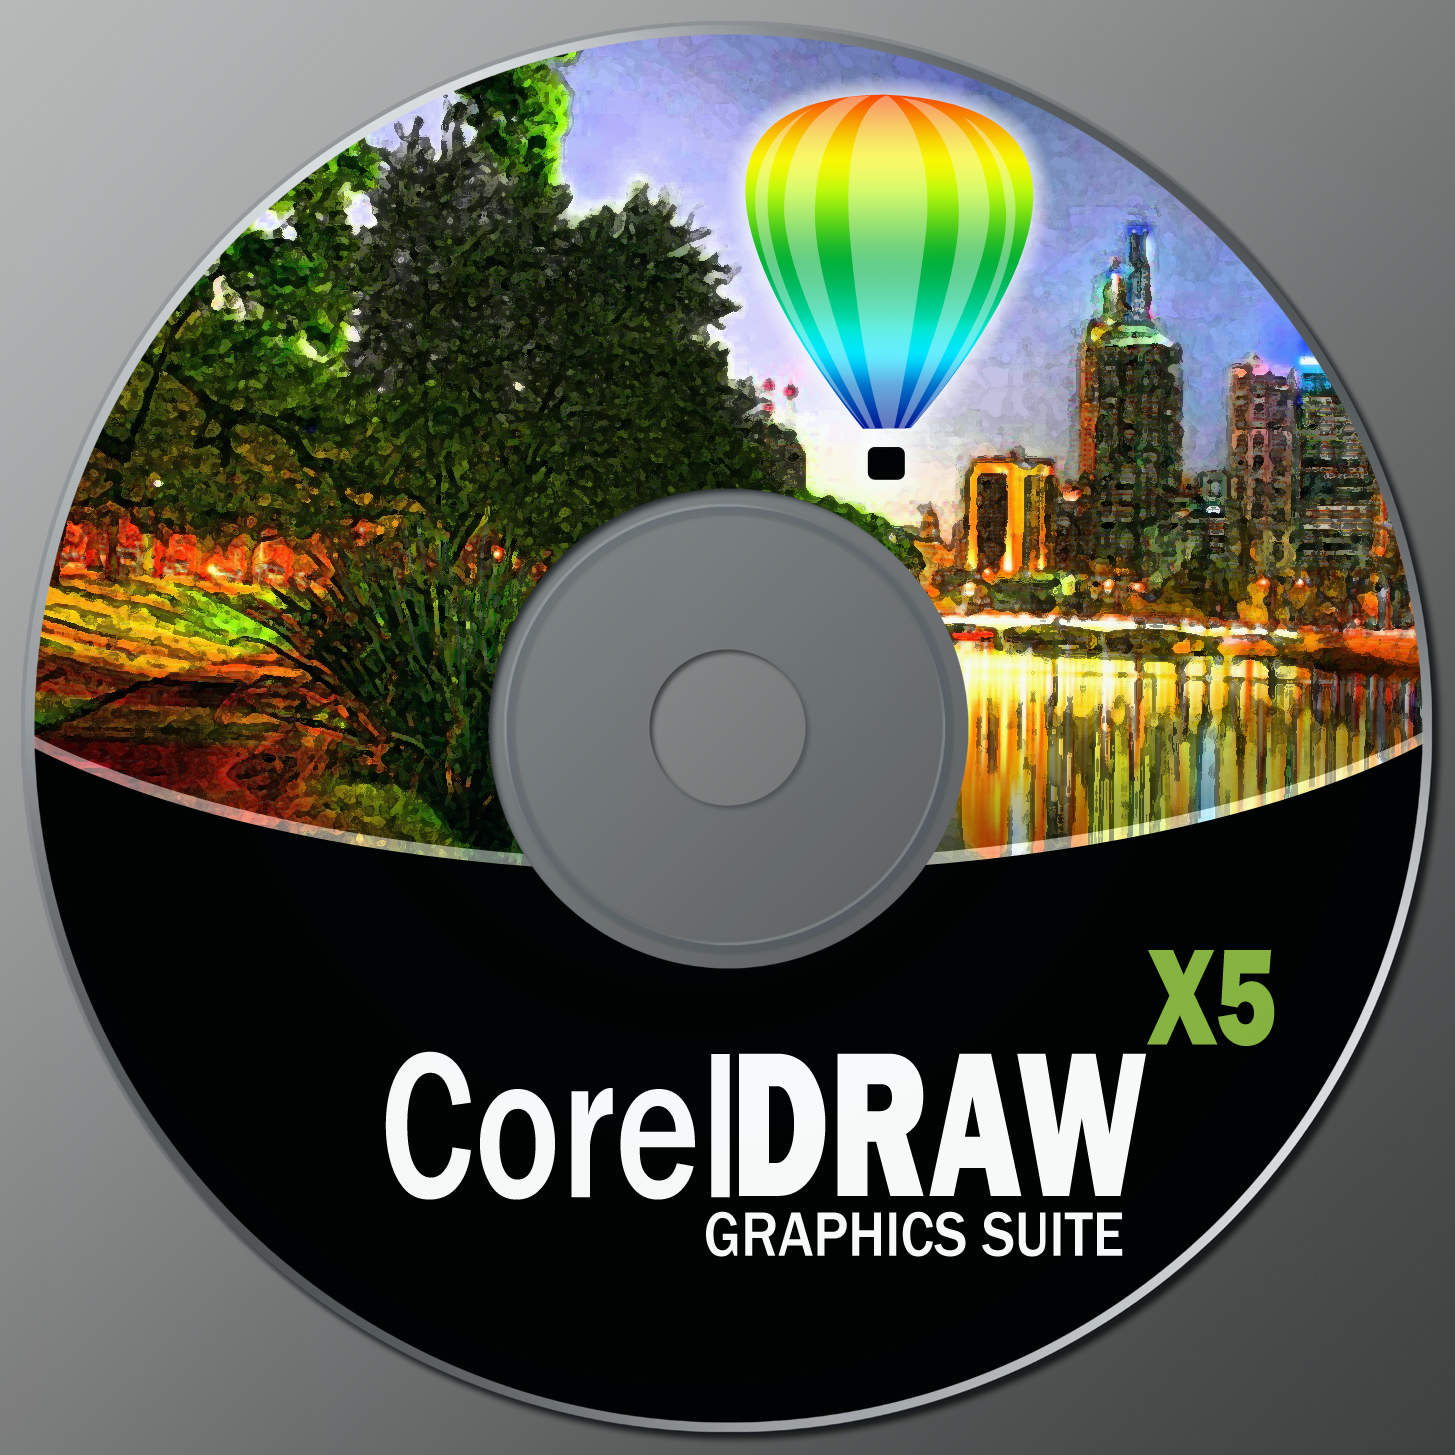 coreldraw 15 free download full version